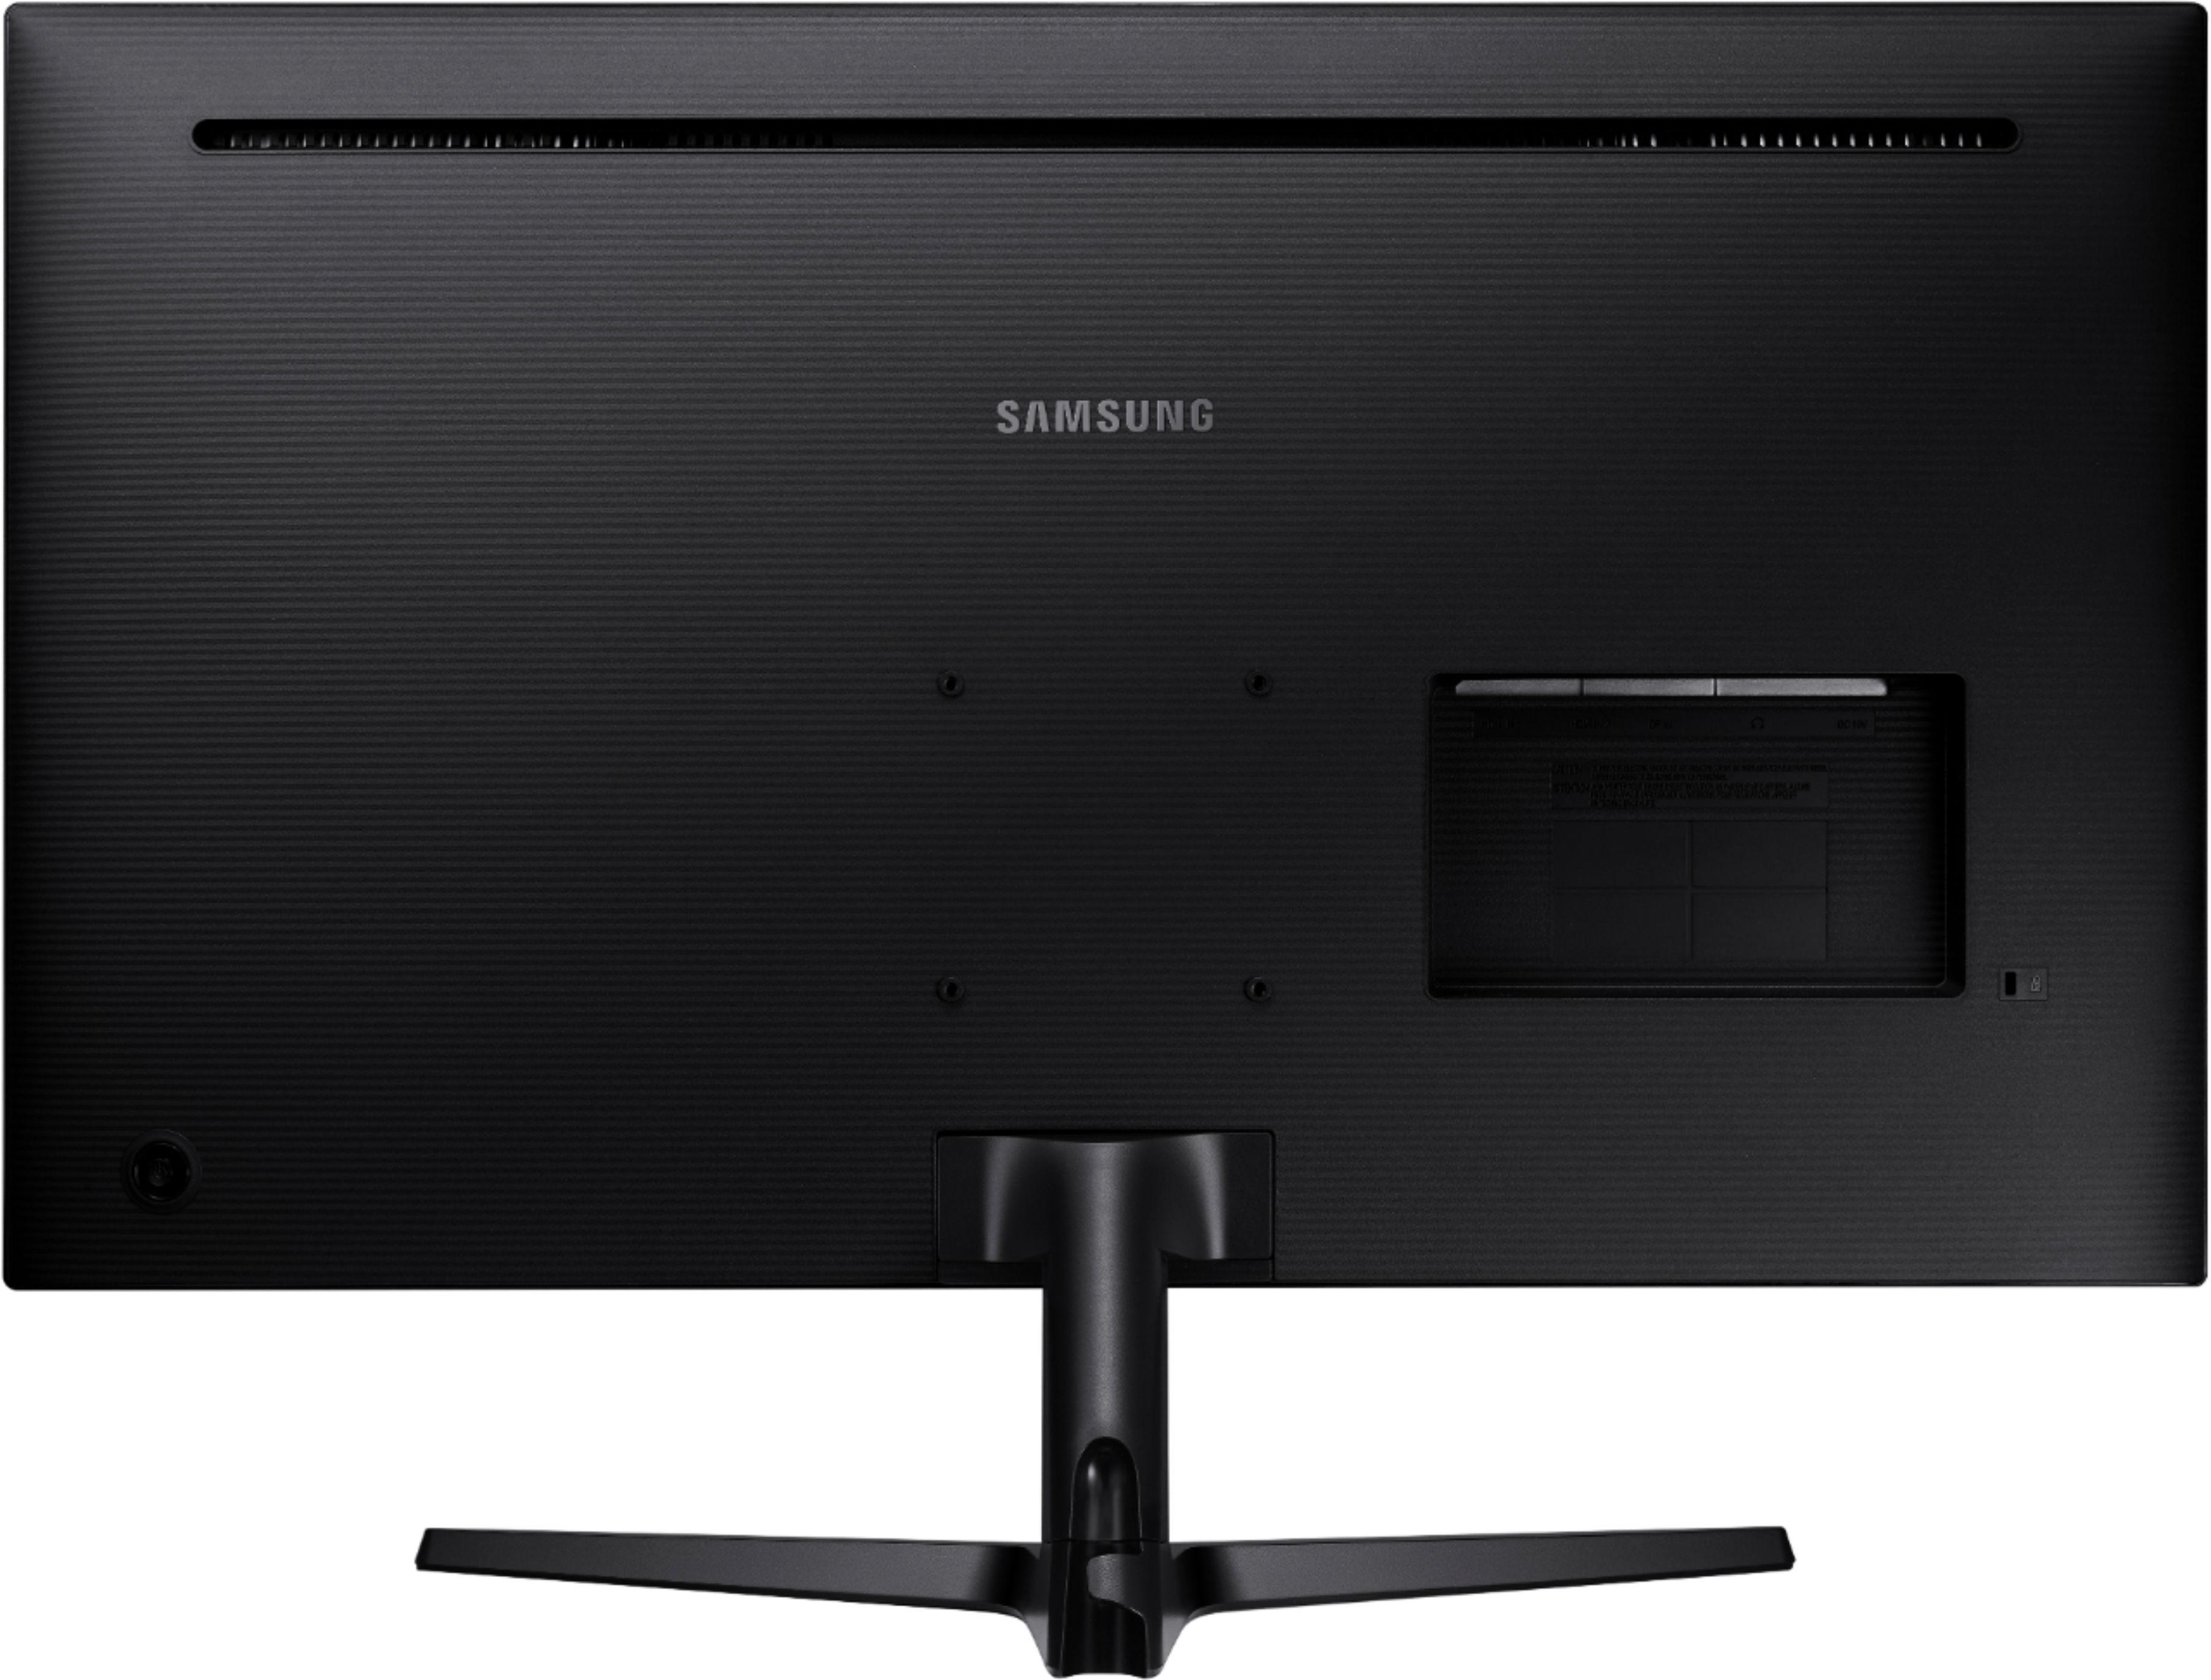 Samsung 32 Class ViewFinity UR90 4K UHD Curved Monitor